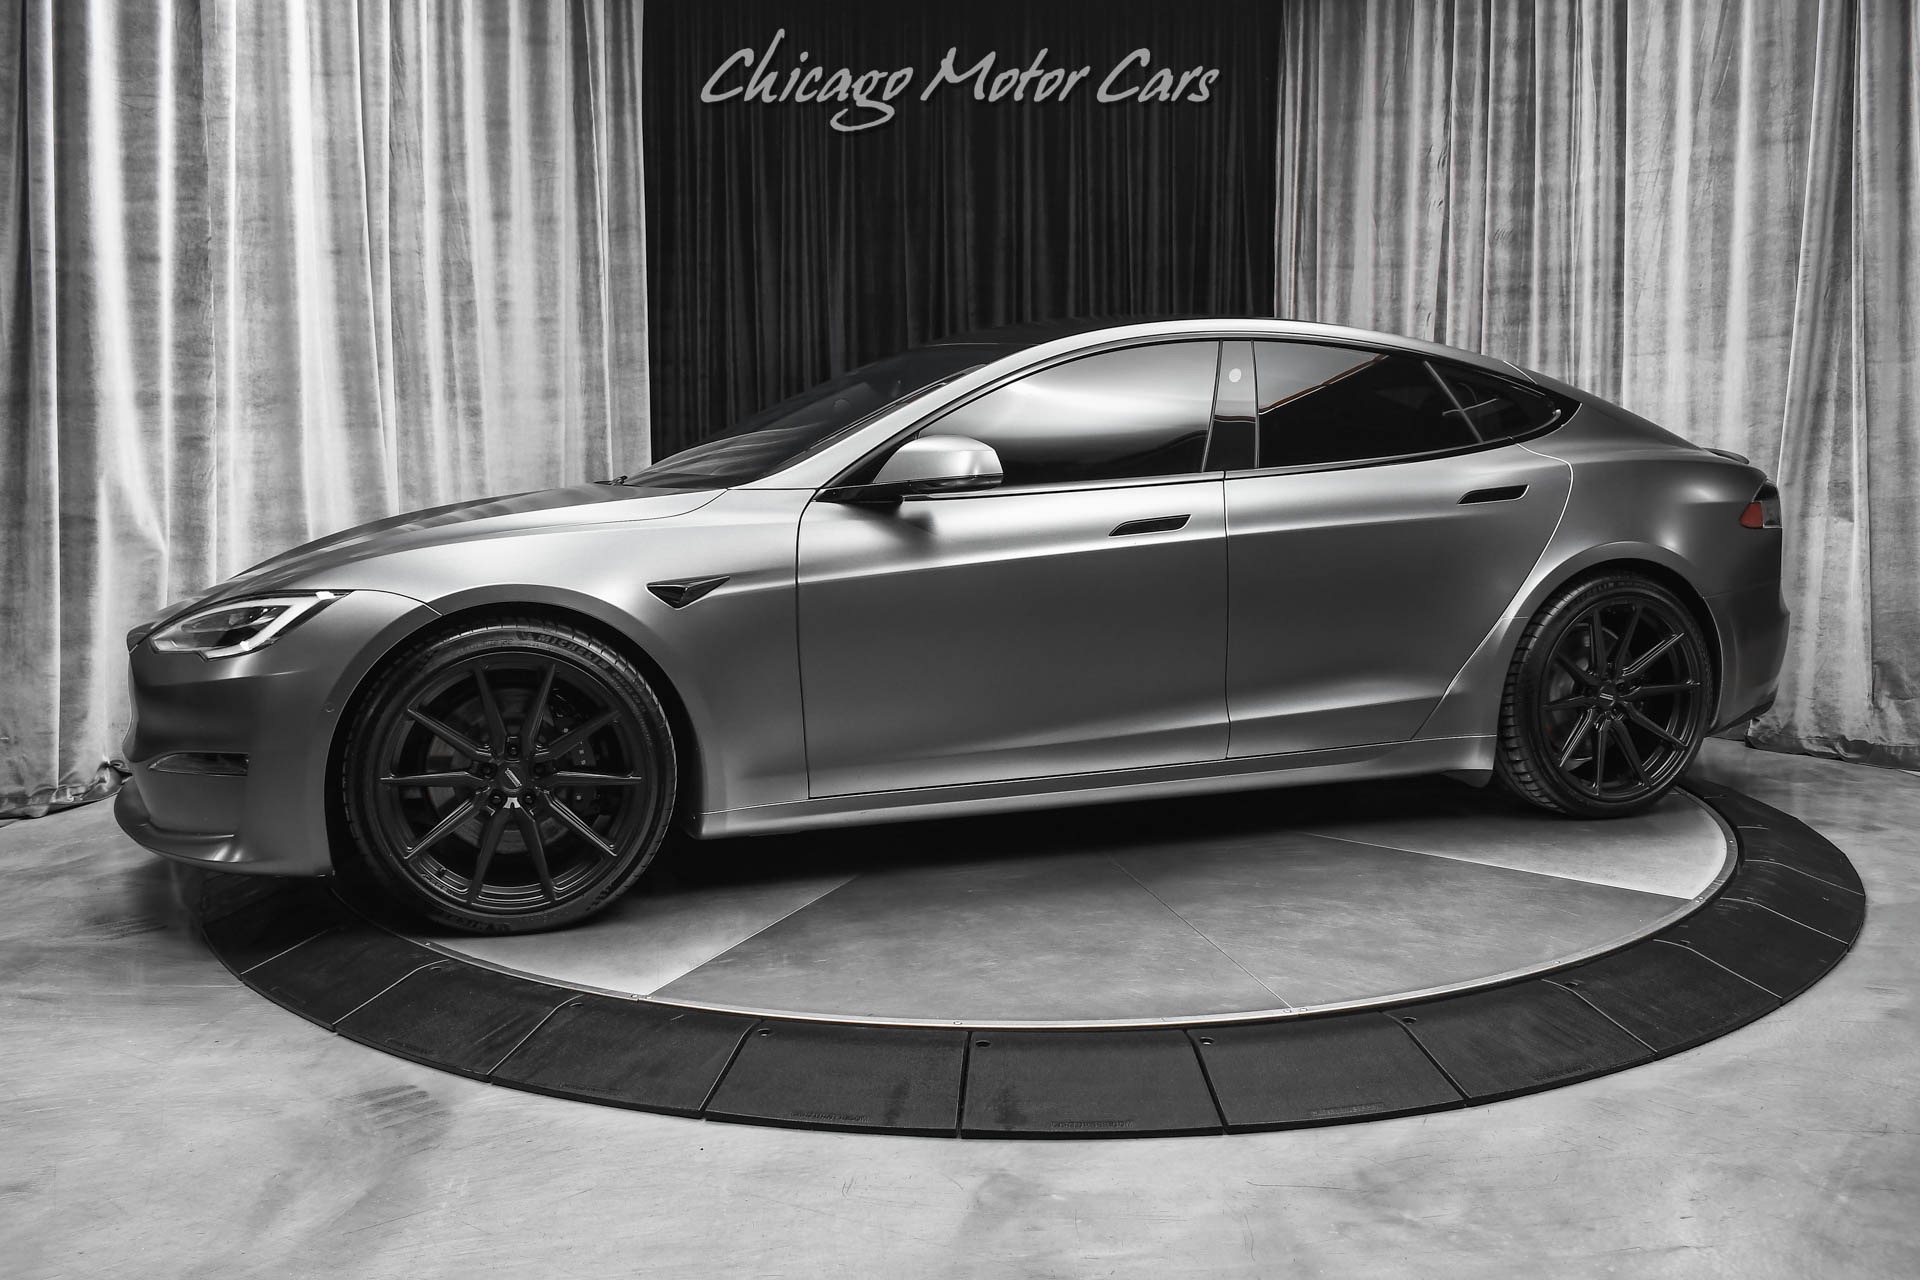 https://www.chicagomotorcars.com/imagetag/10305/main/l/Used-2021-Tesla-Model-S-Plaid-Sedan-Autopilot-Matte-Gray-Wrap-Vossen-Hybrid-Forged-Wheels.jpg